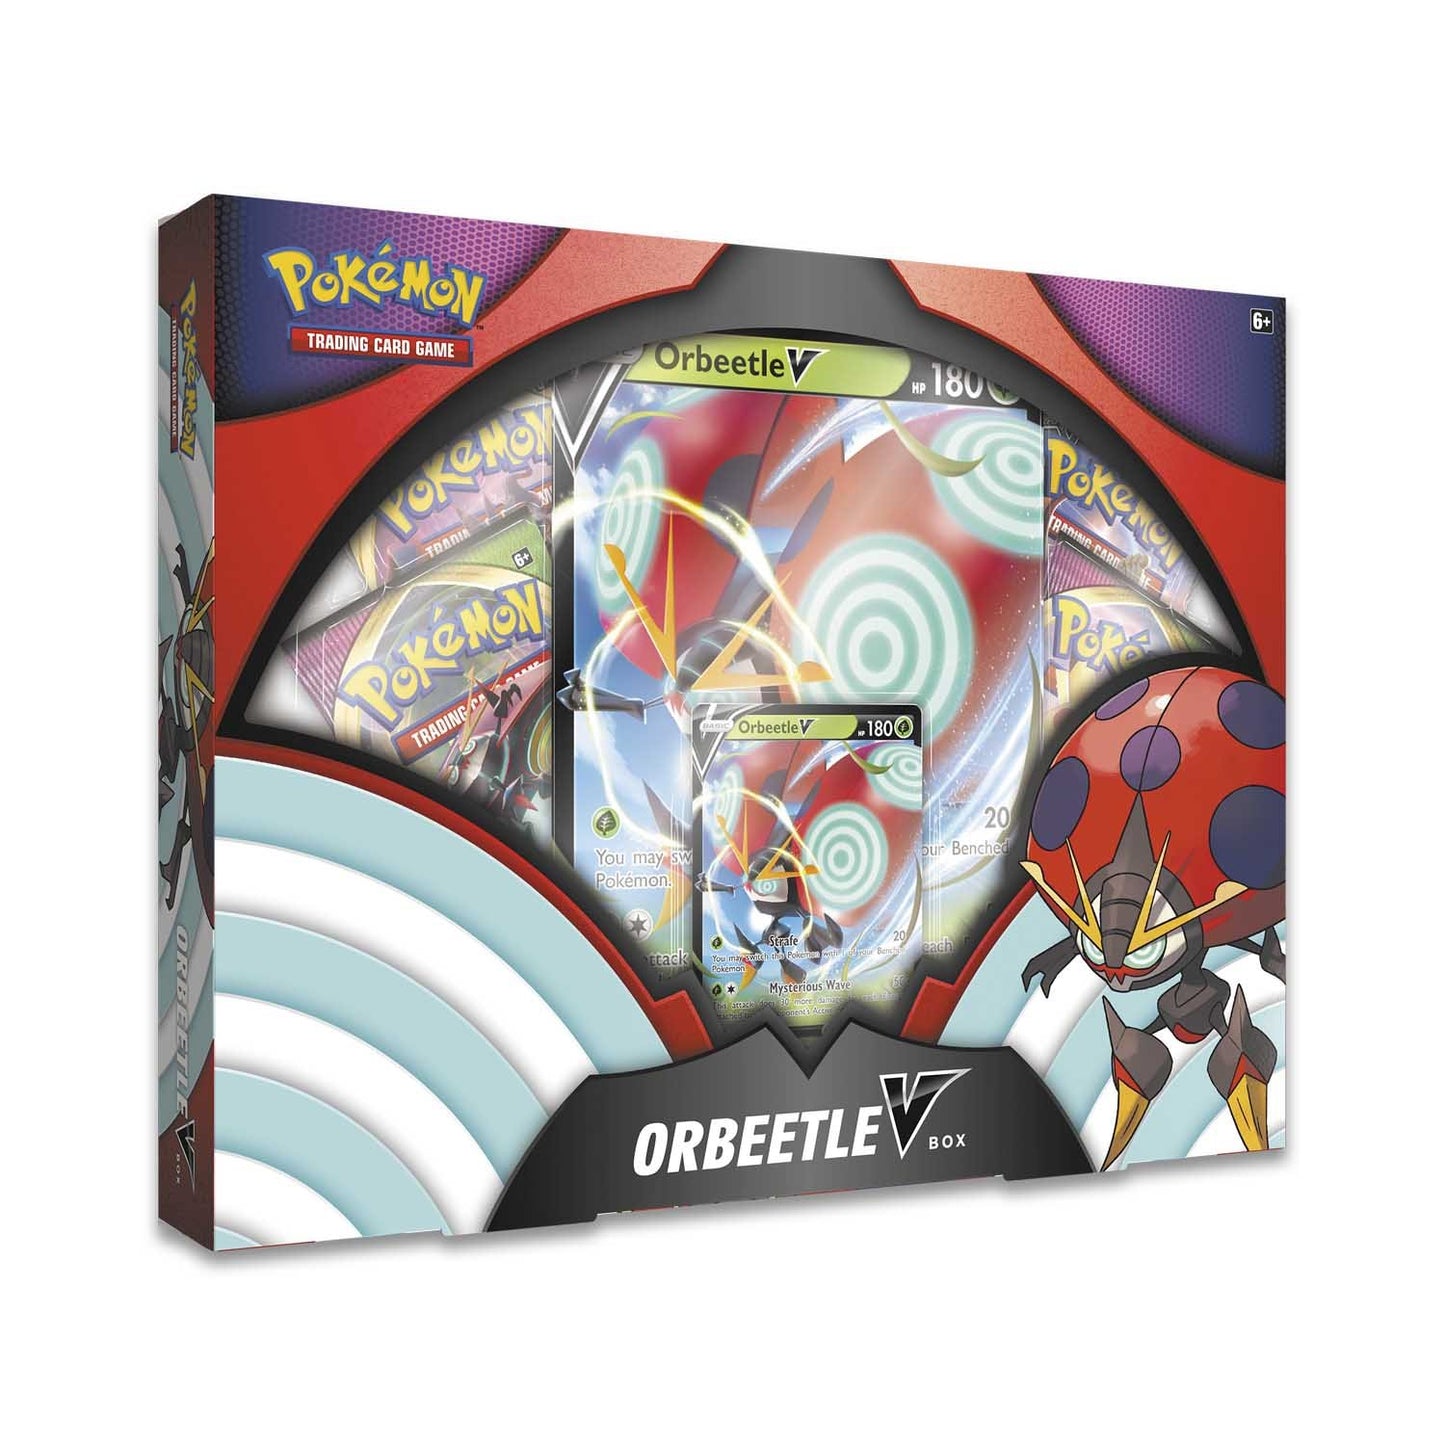 Pokémon Orbelete V Box Special Collection Gift Box